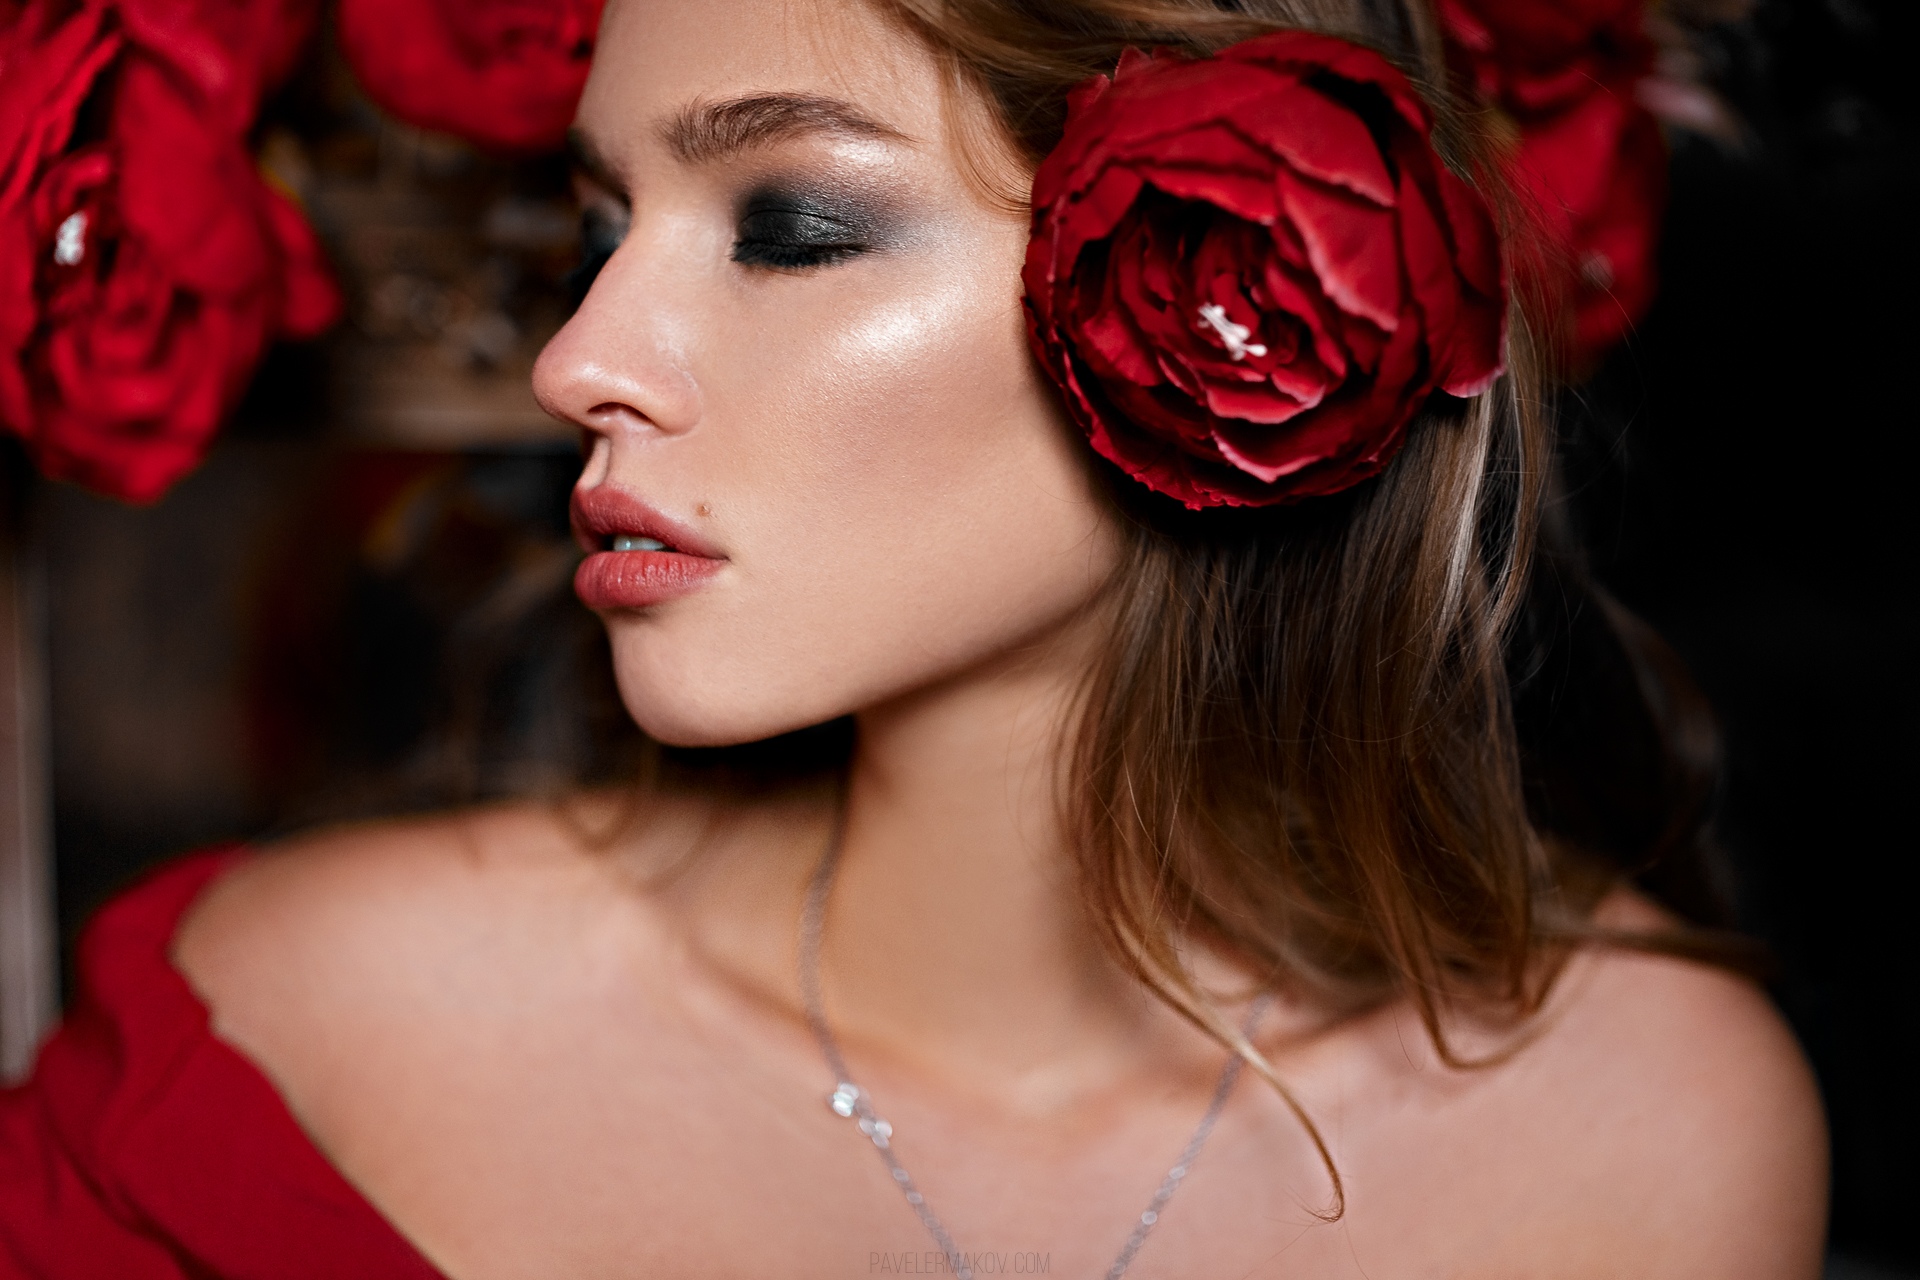 Pavel Ermakov Women Portrait Red Bare Shoulders Moles Make Up Eyeshadow Lipstick Flower In Hair Rose 1920x1280